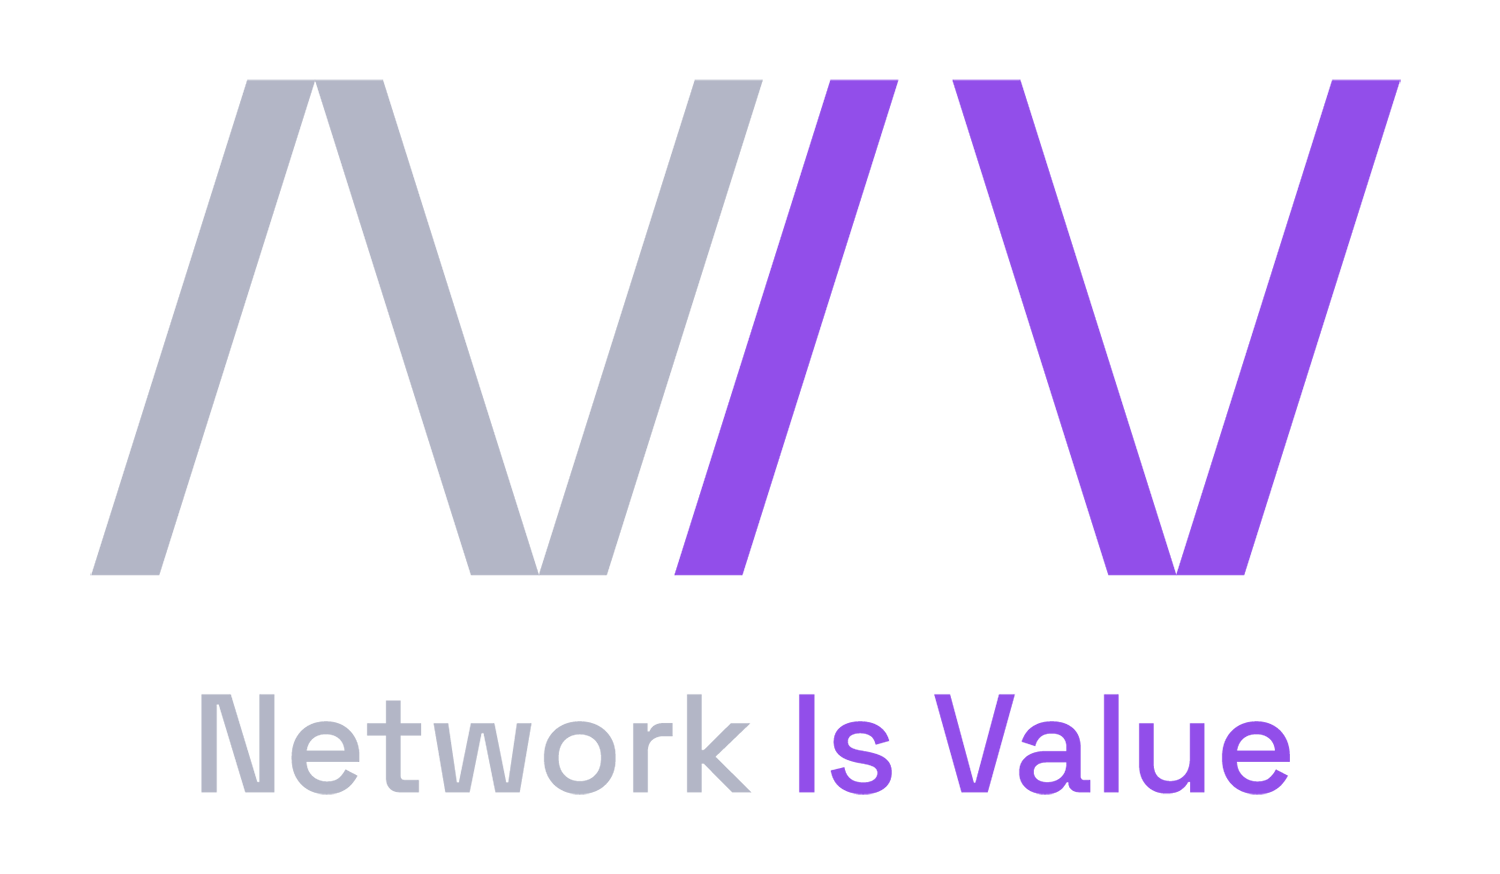 Niv Network - Network Is Value